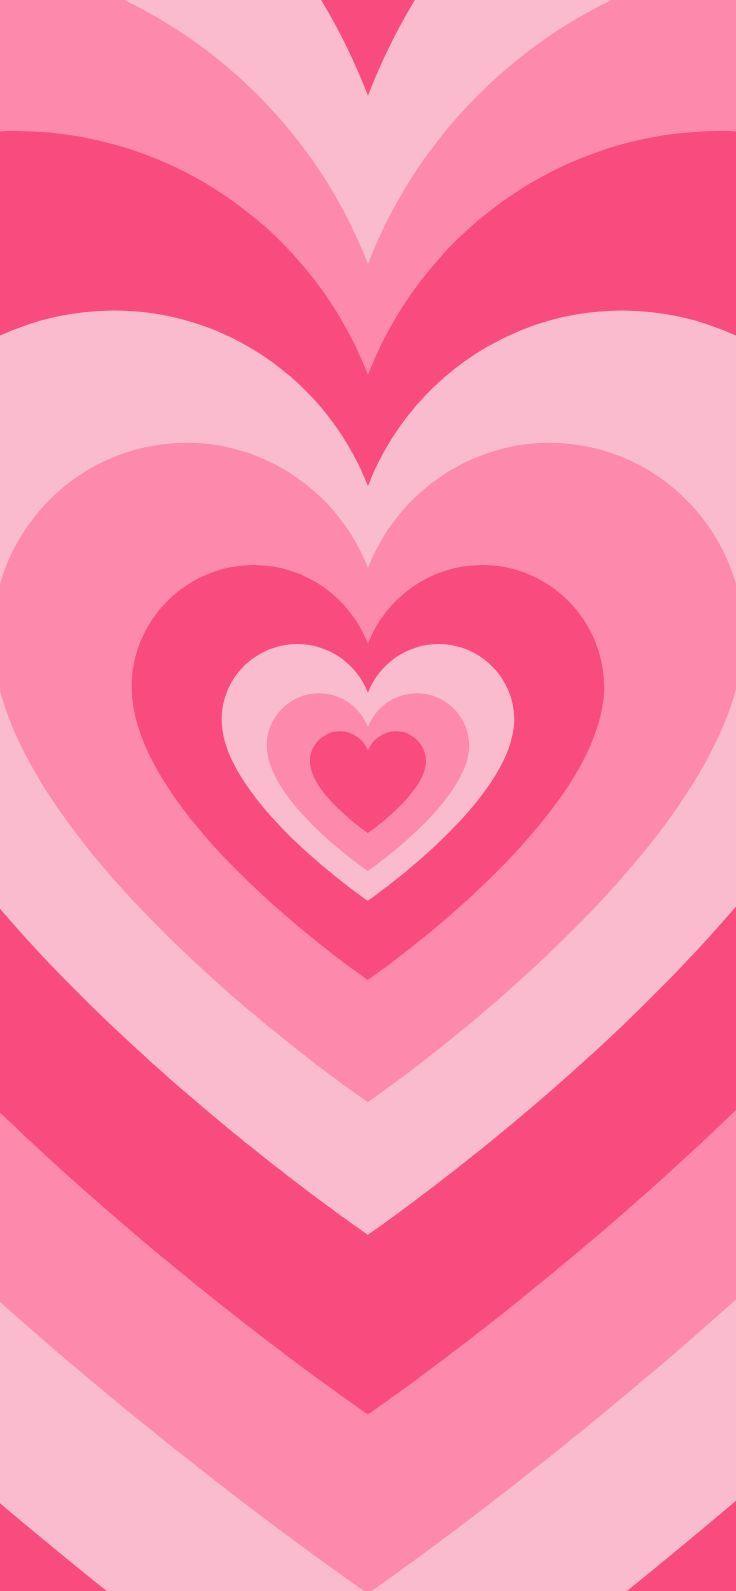 Y2k Pink Heart Wallpaper iPhone Aesthetic